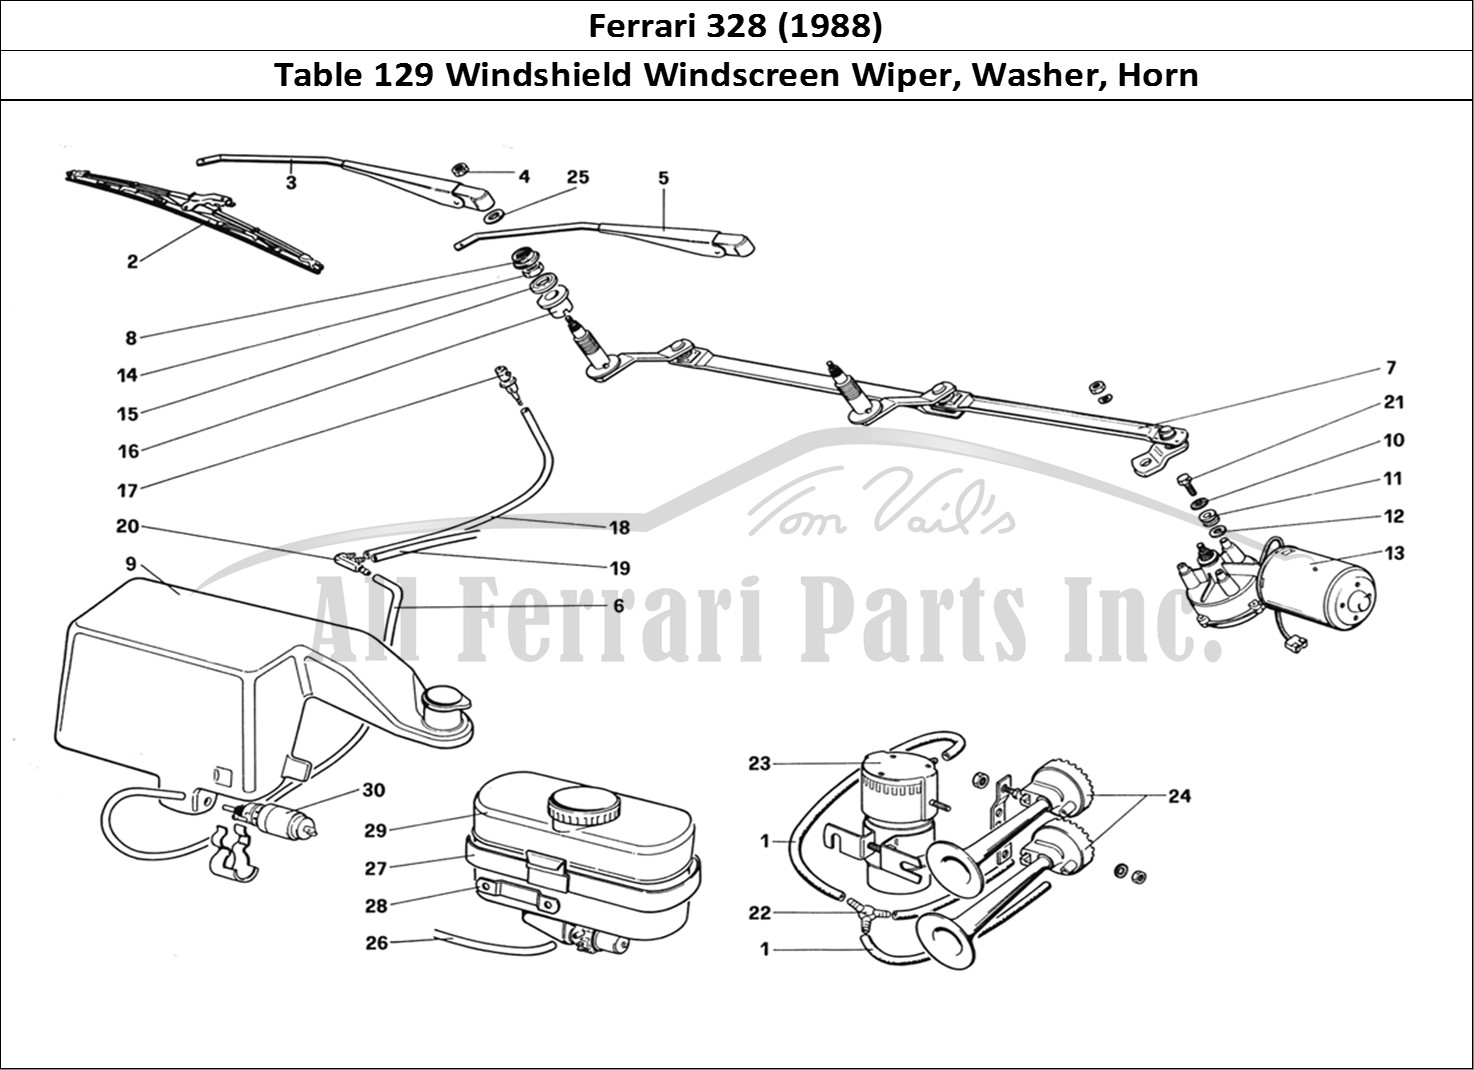 Ferrari Parts Ferrari 328 (1988) Page 129 Windshield Wiper, Washer